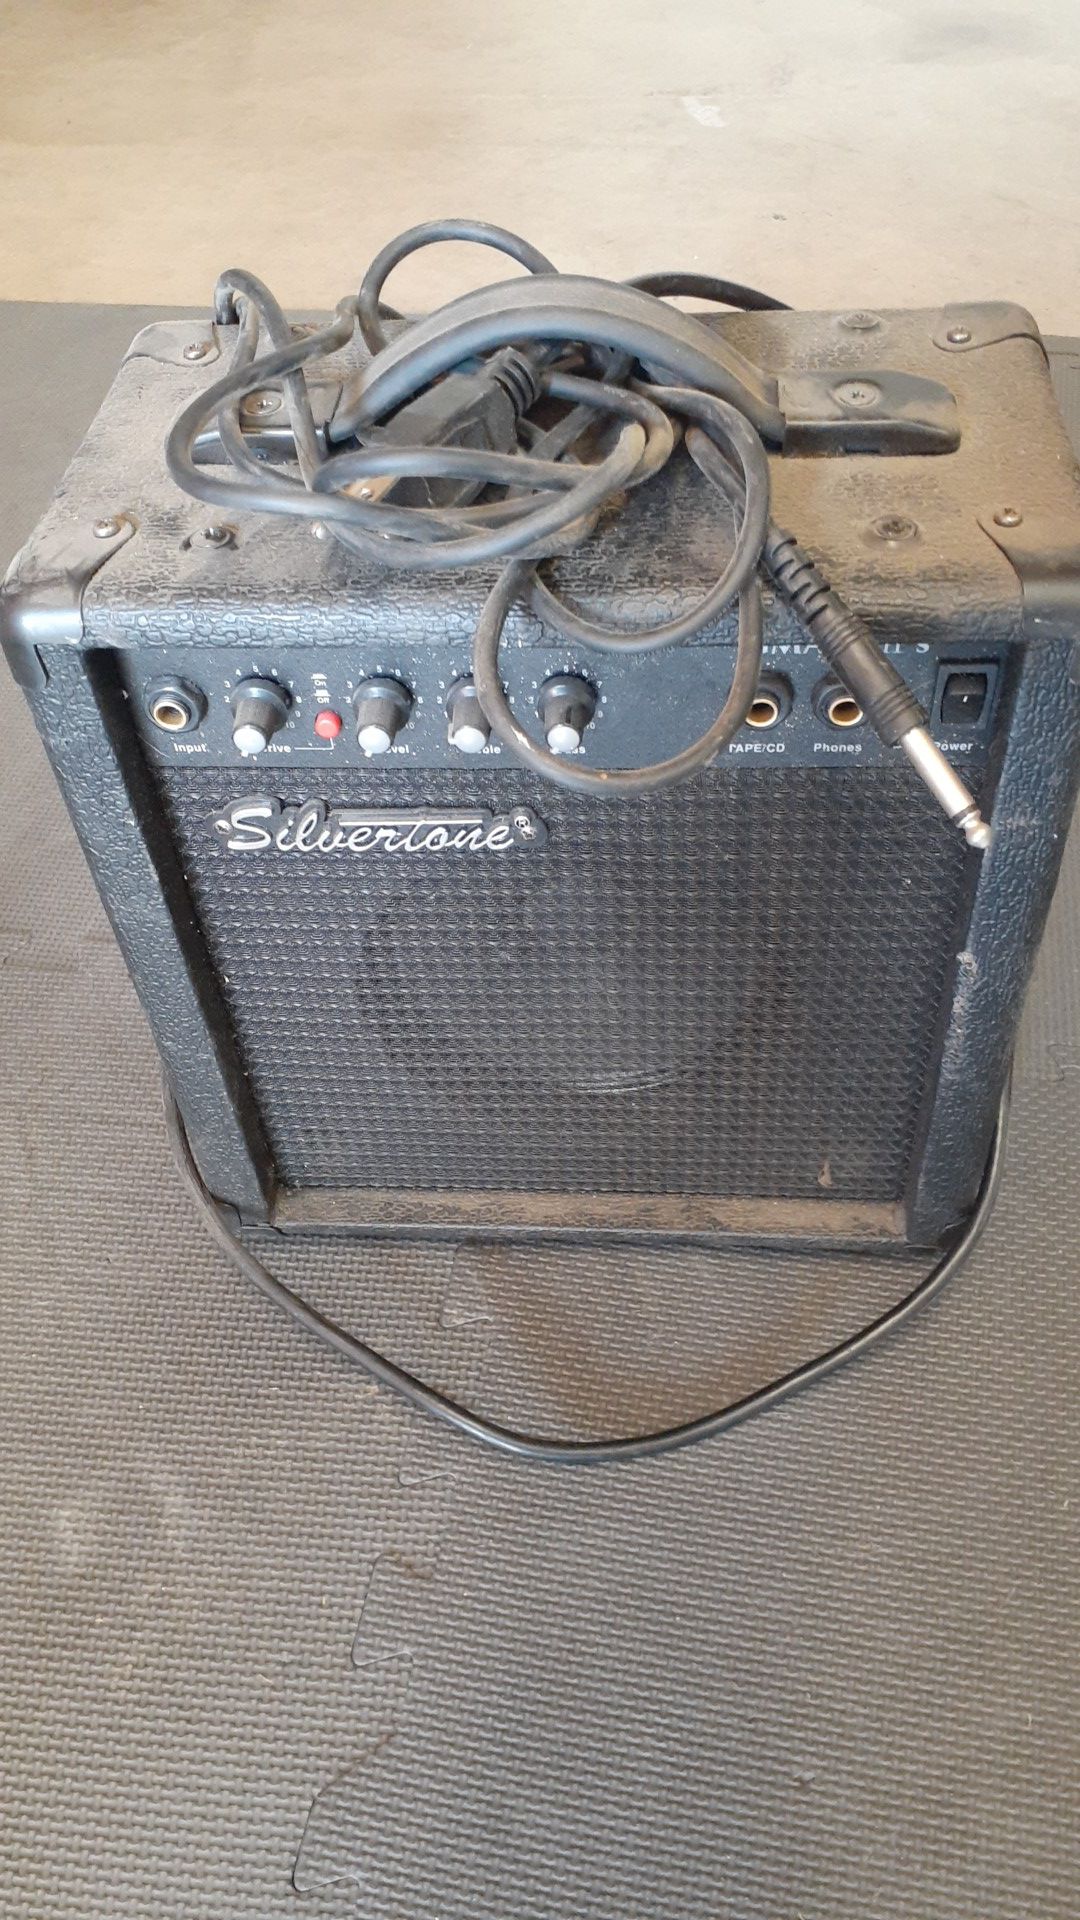 Silverstone guitar amp